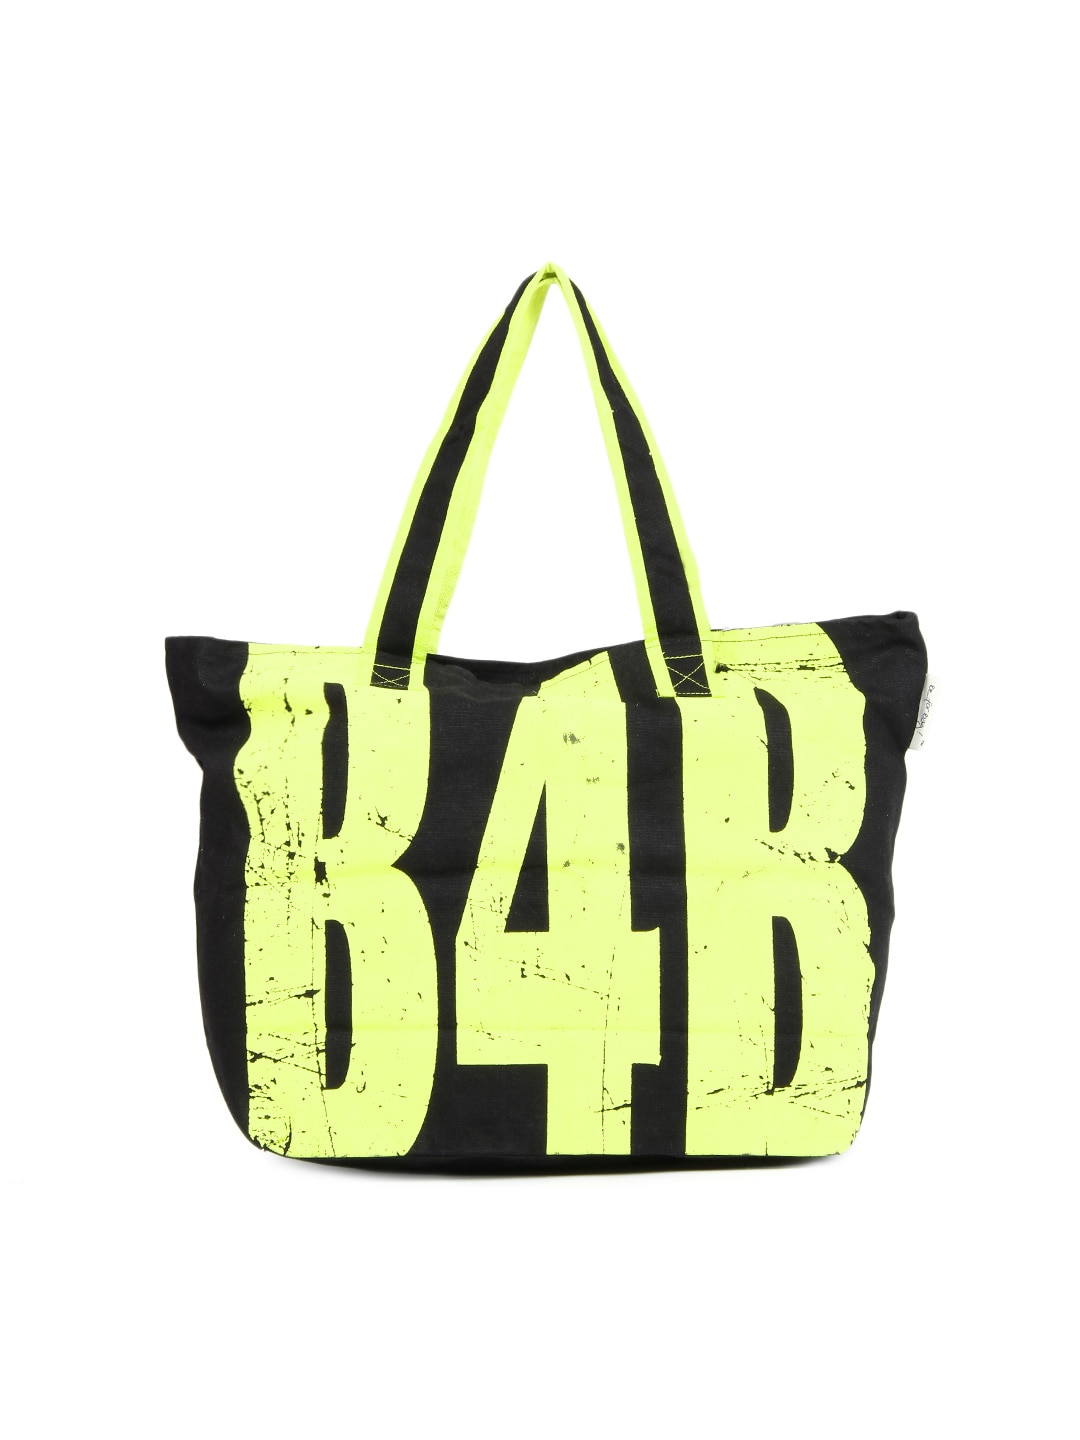 Be For Bag Women Black & Yellow Tote Bag